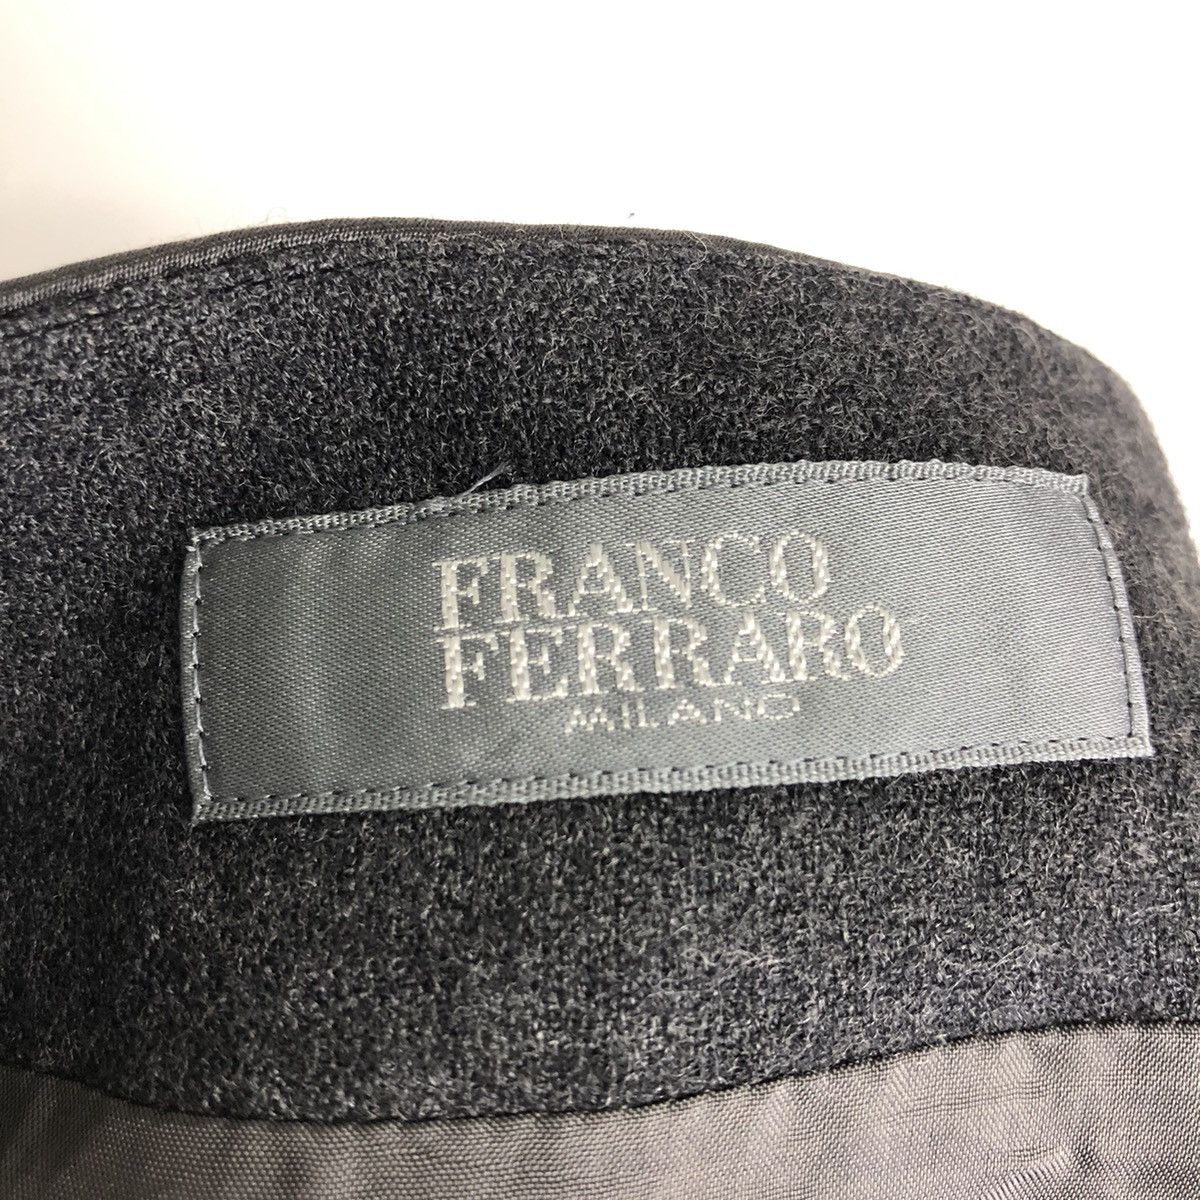 Franco Ferraro Milano Ruffled Skirt Grey - 4